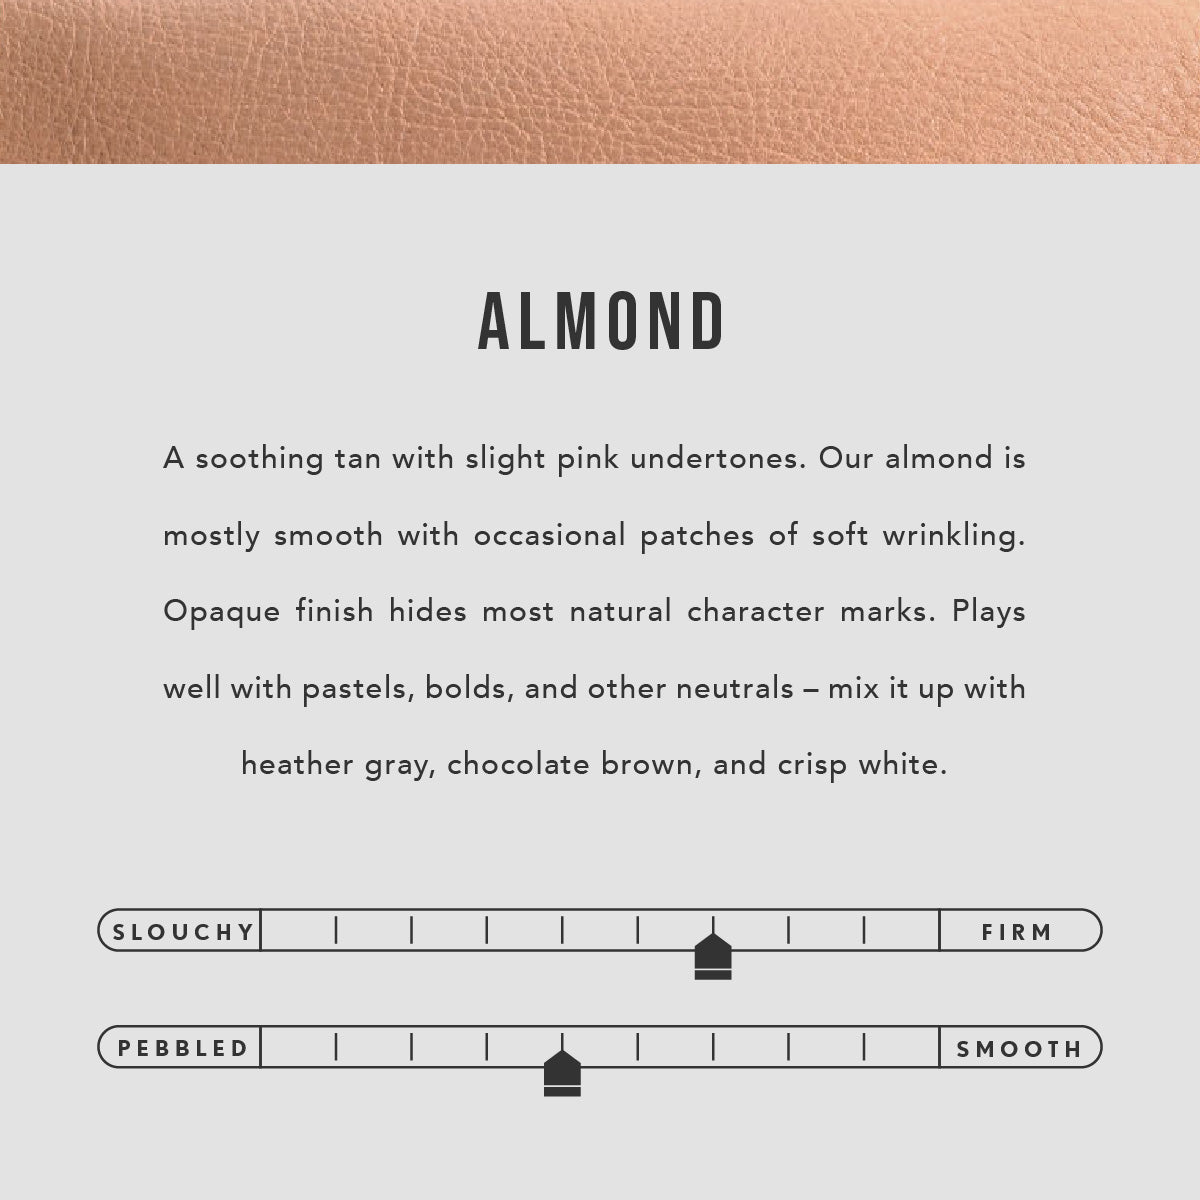 Almond | infographic